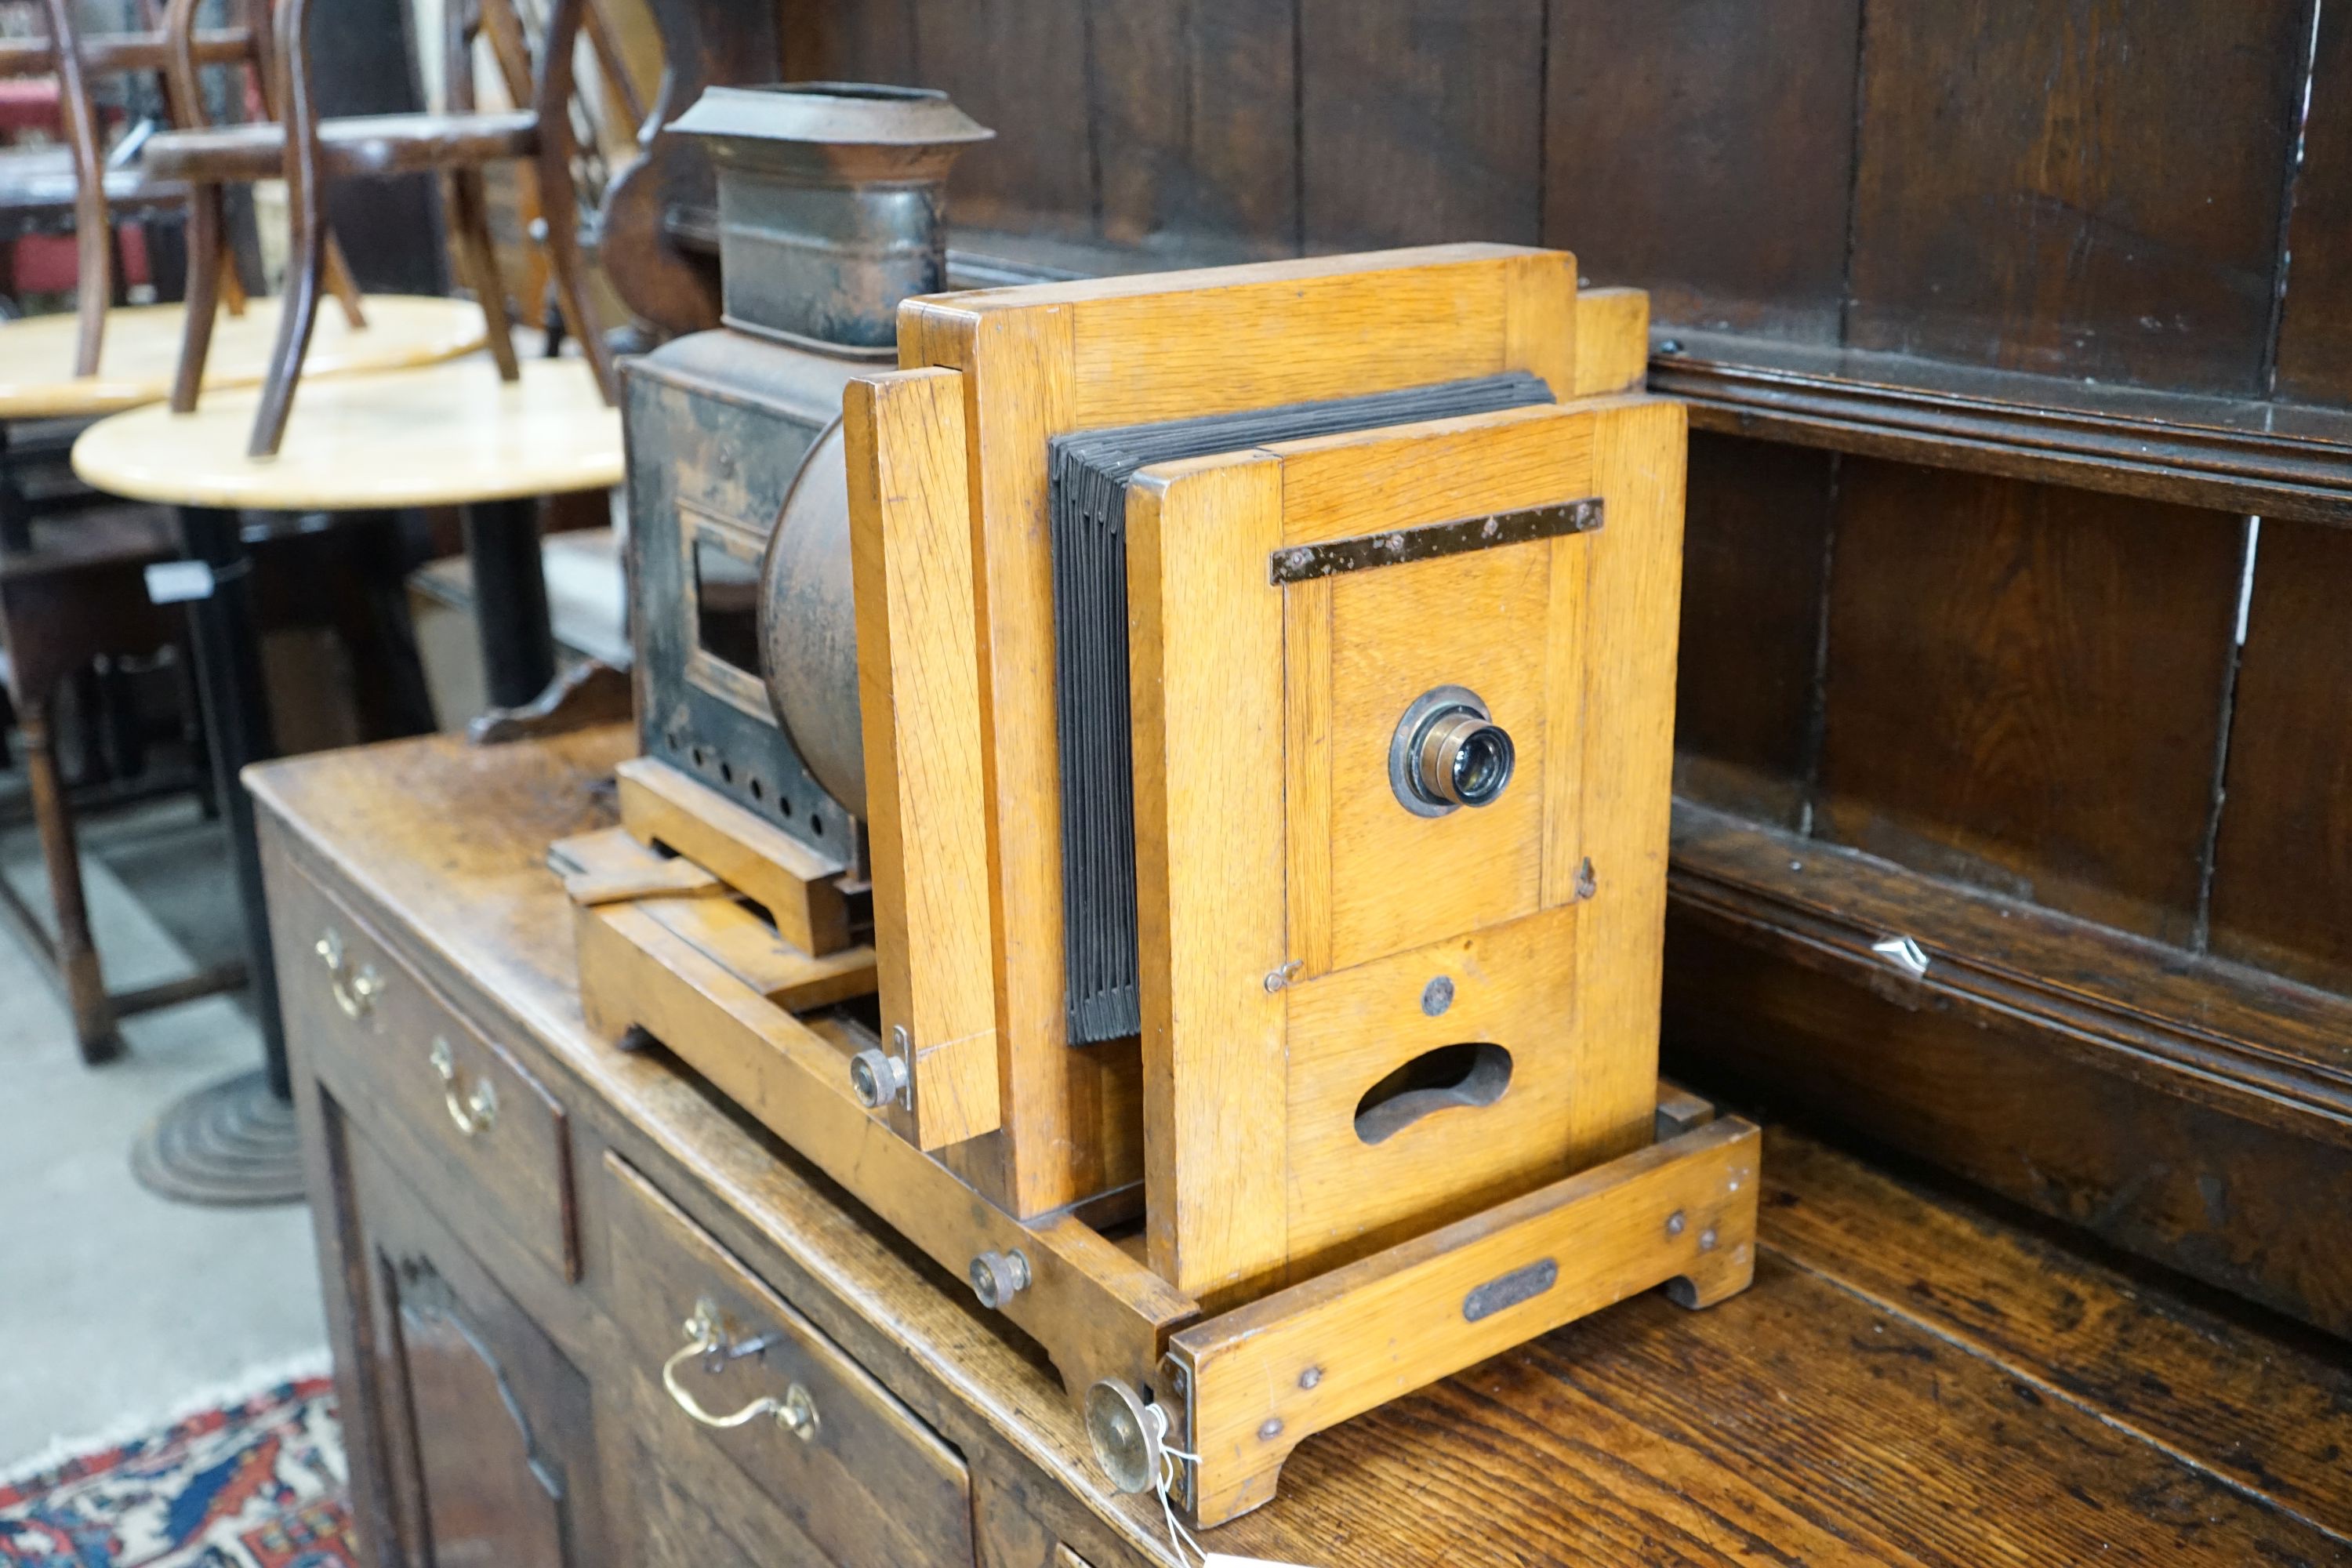 A Victorian oak magic lantern converted to electricity